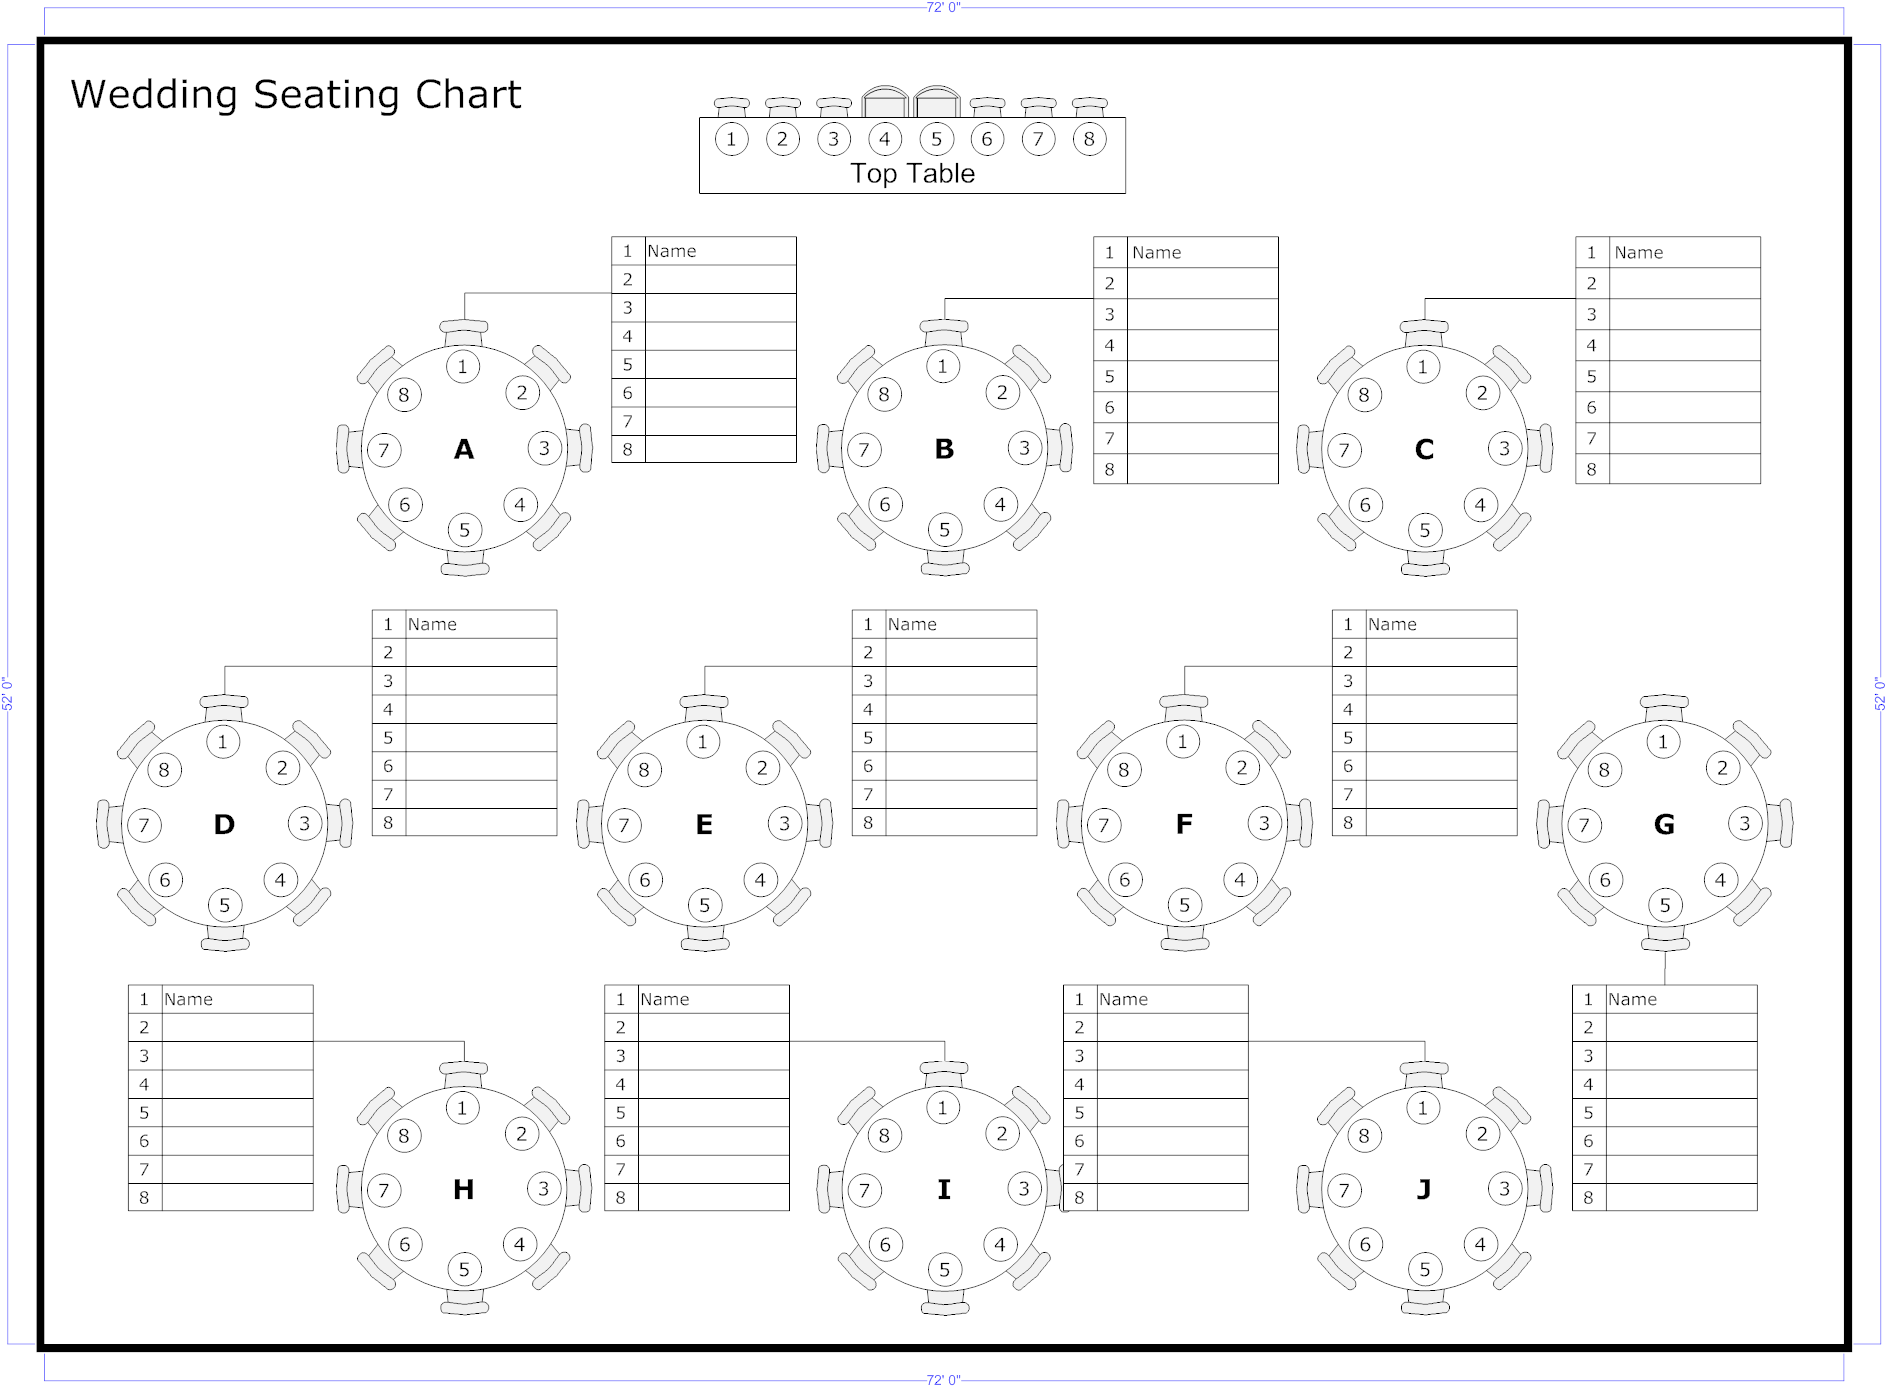 Seating Chart Make a Seating Chart, Seating Chart Templates